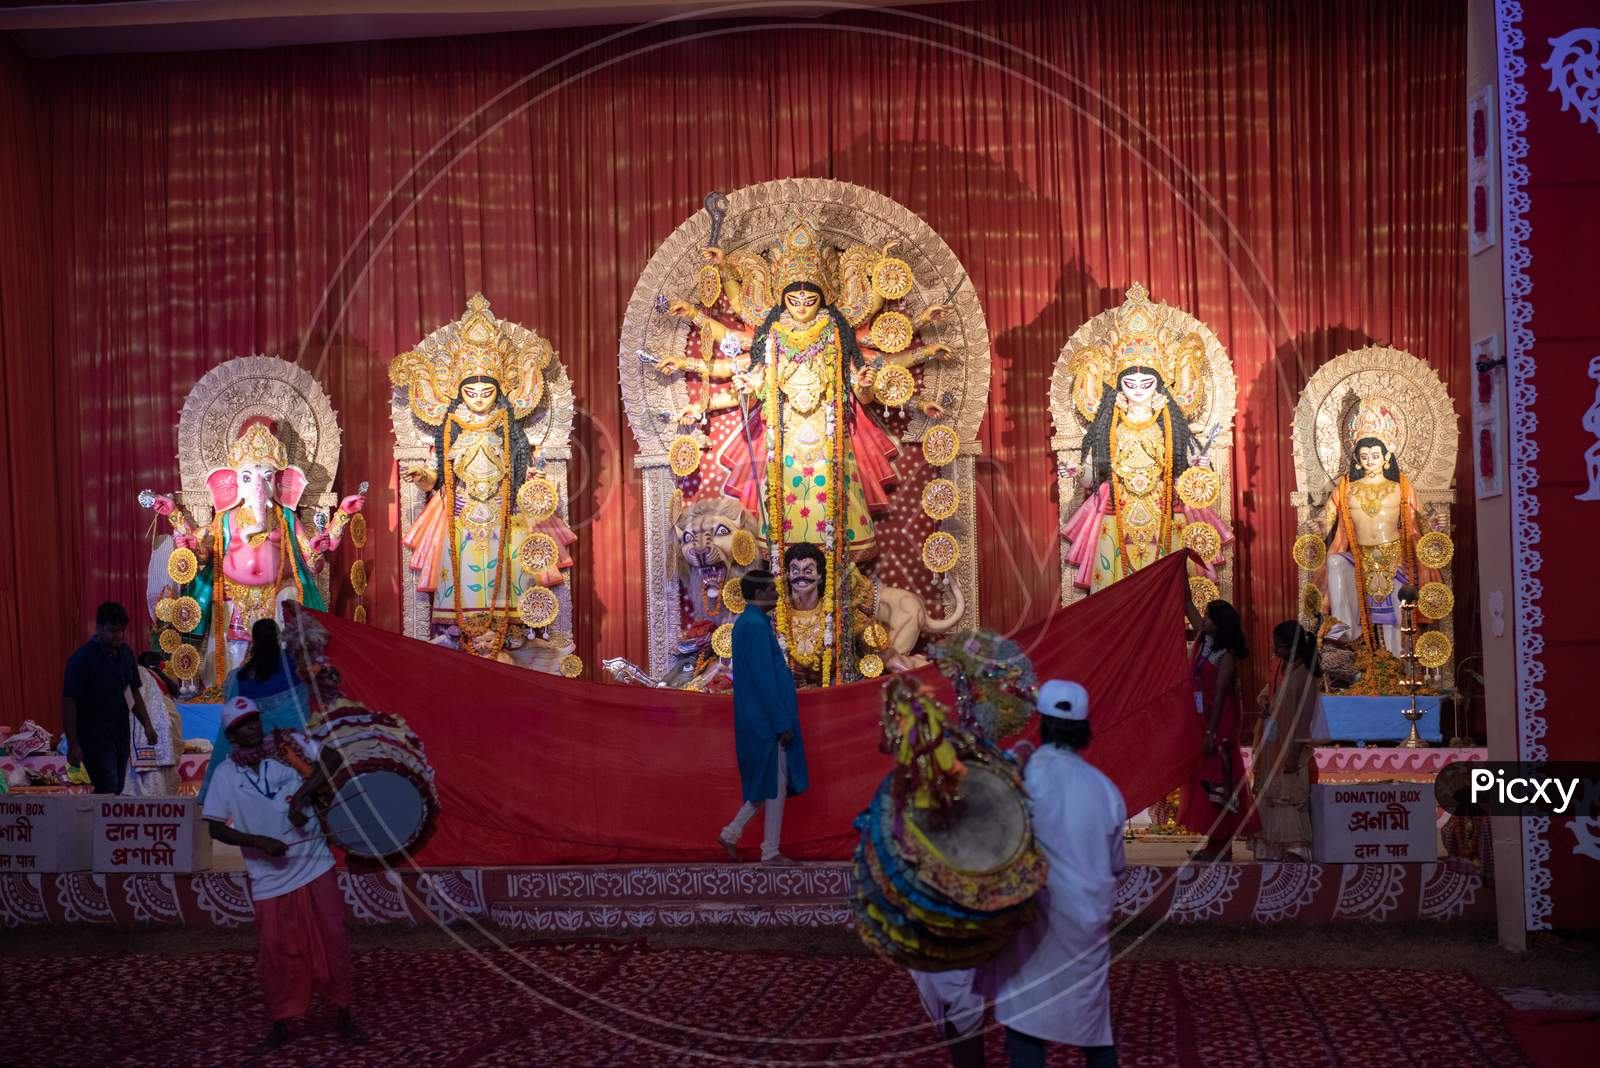 Indian Drum Artists Playing Drums Or Dol At Mandapas Of Goddess Durga During Dussera